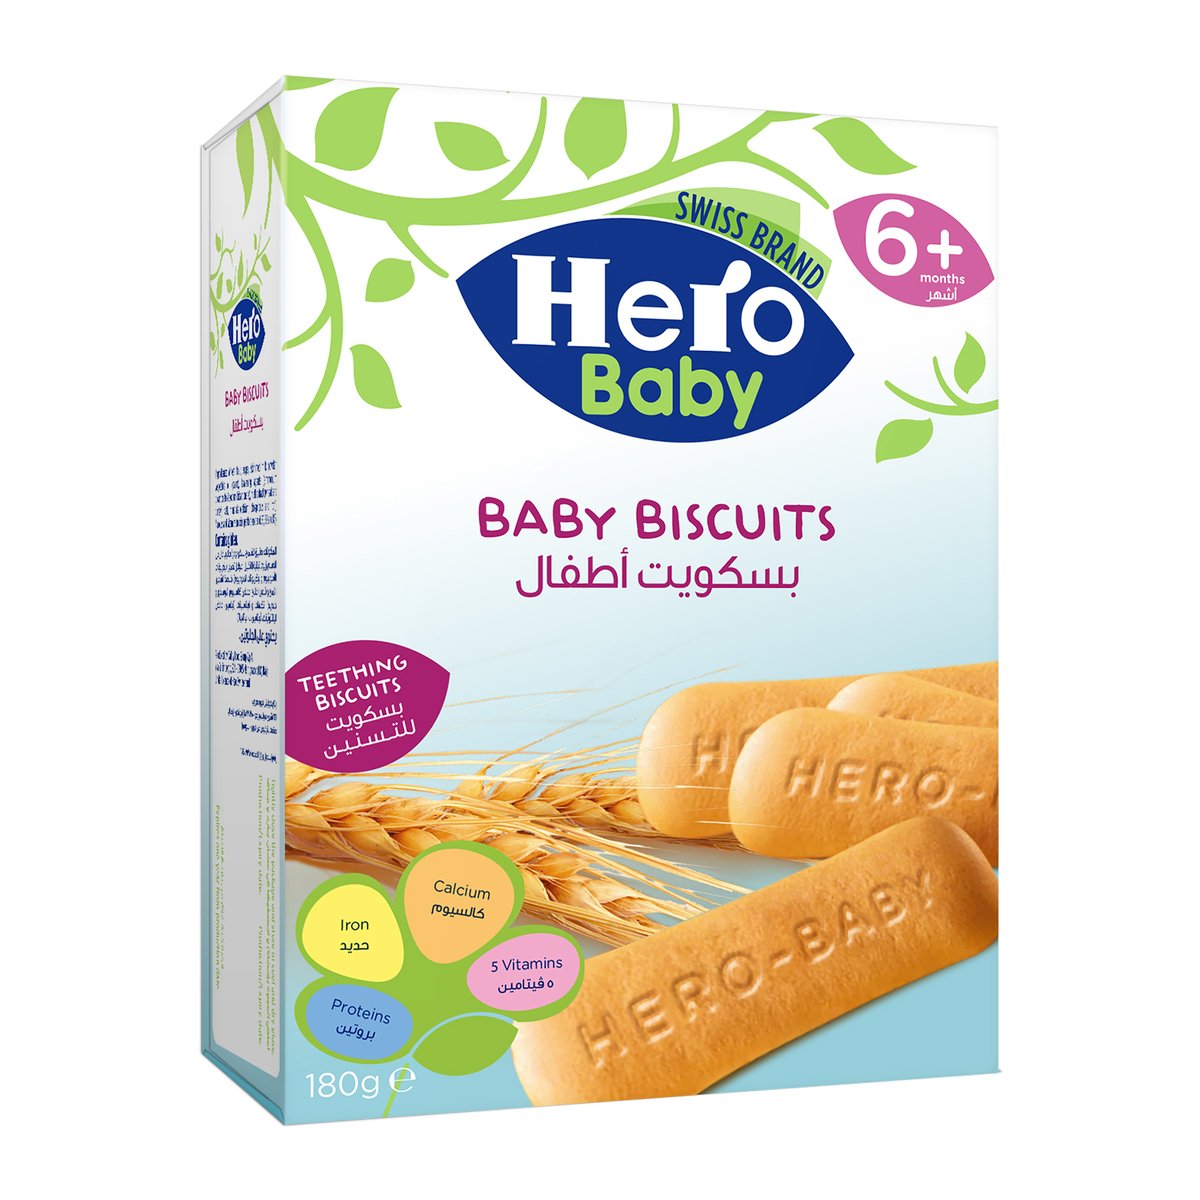 Hero Baby 8 Cereals & Fruit with Milk 150g - Pack of 3